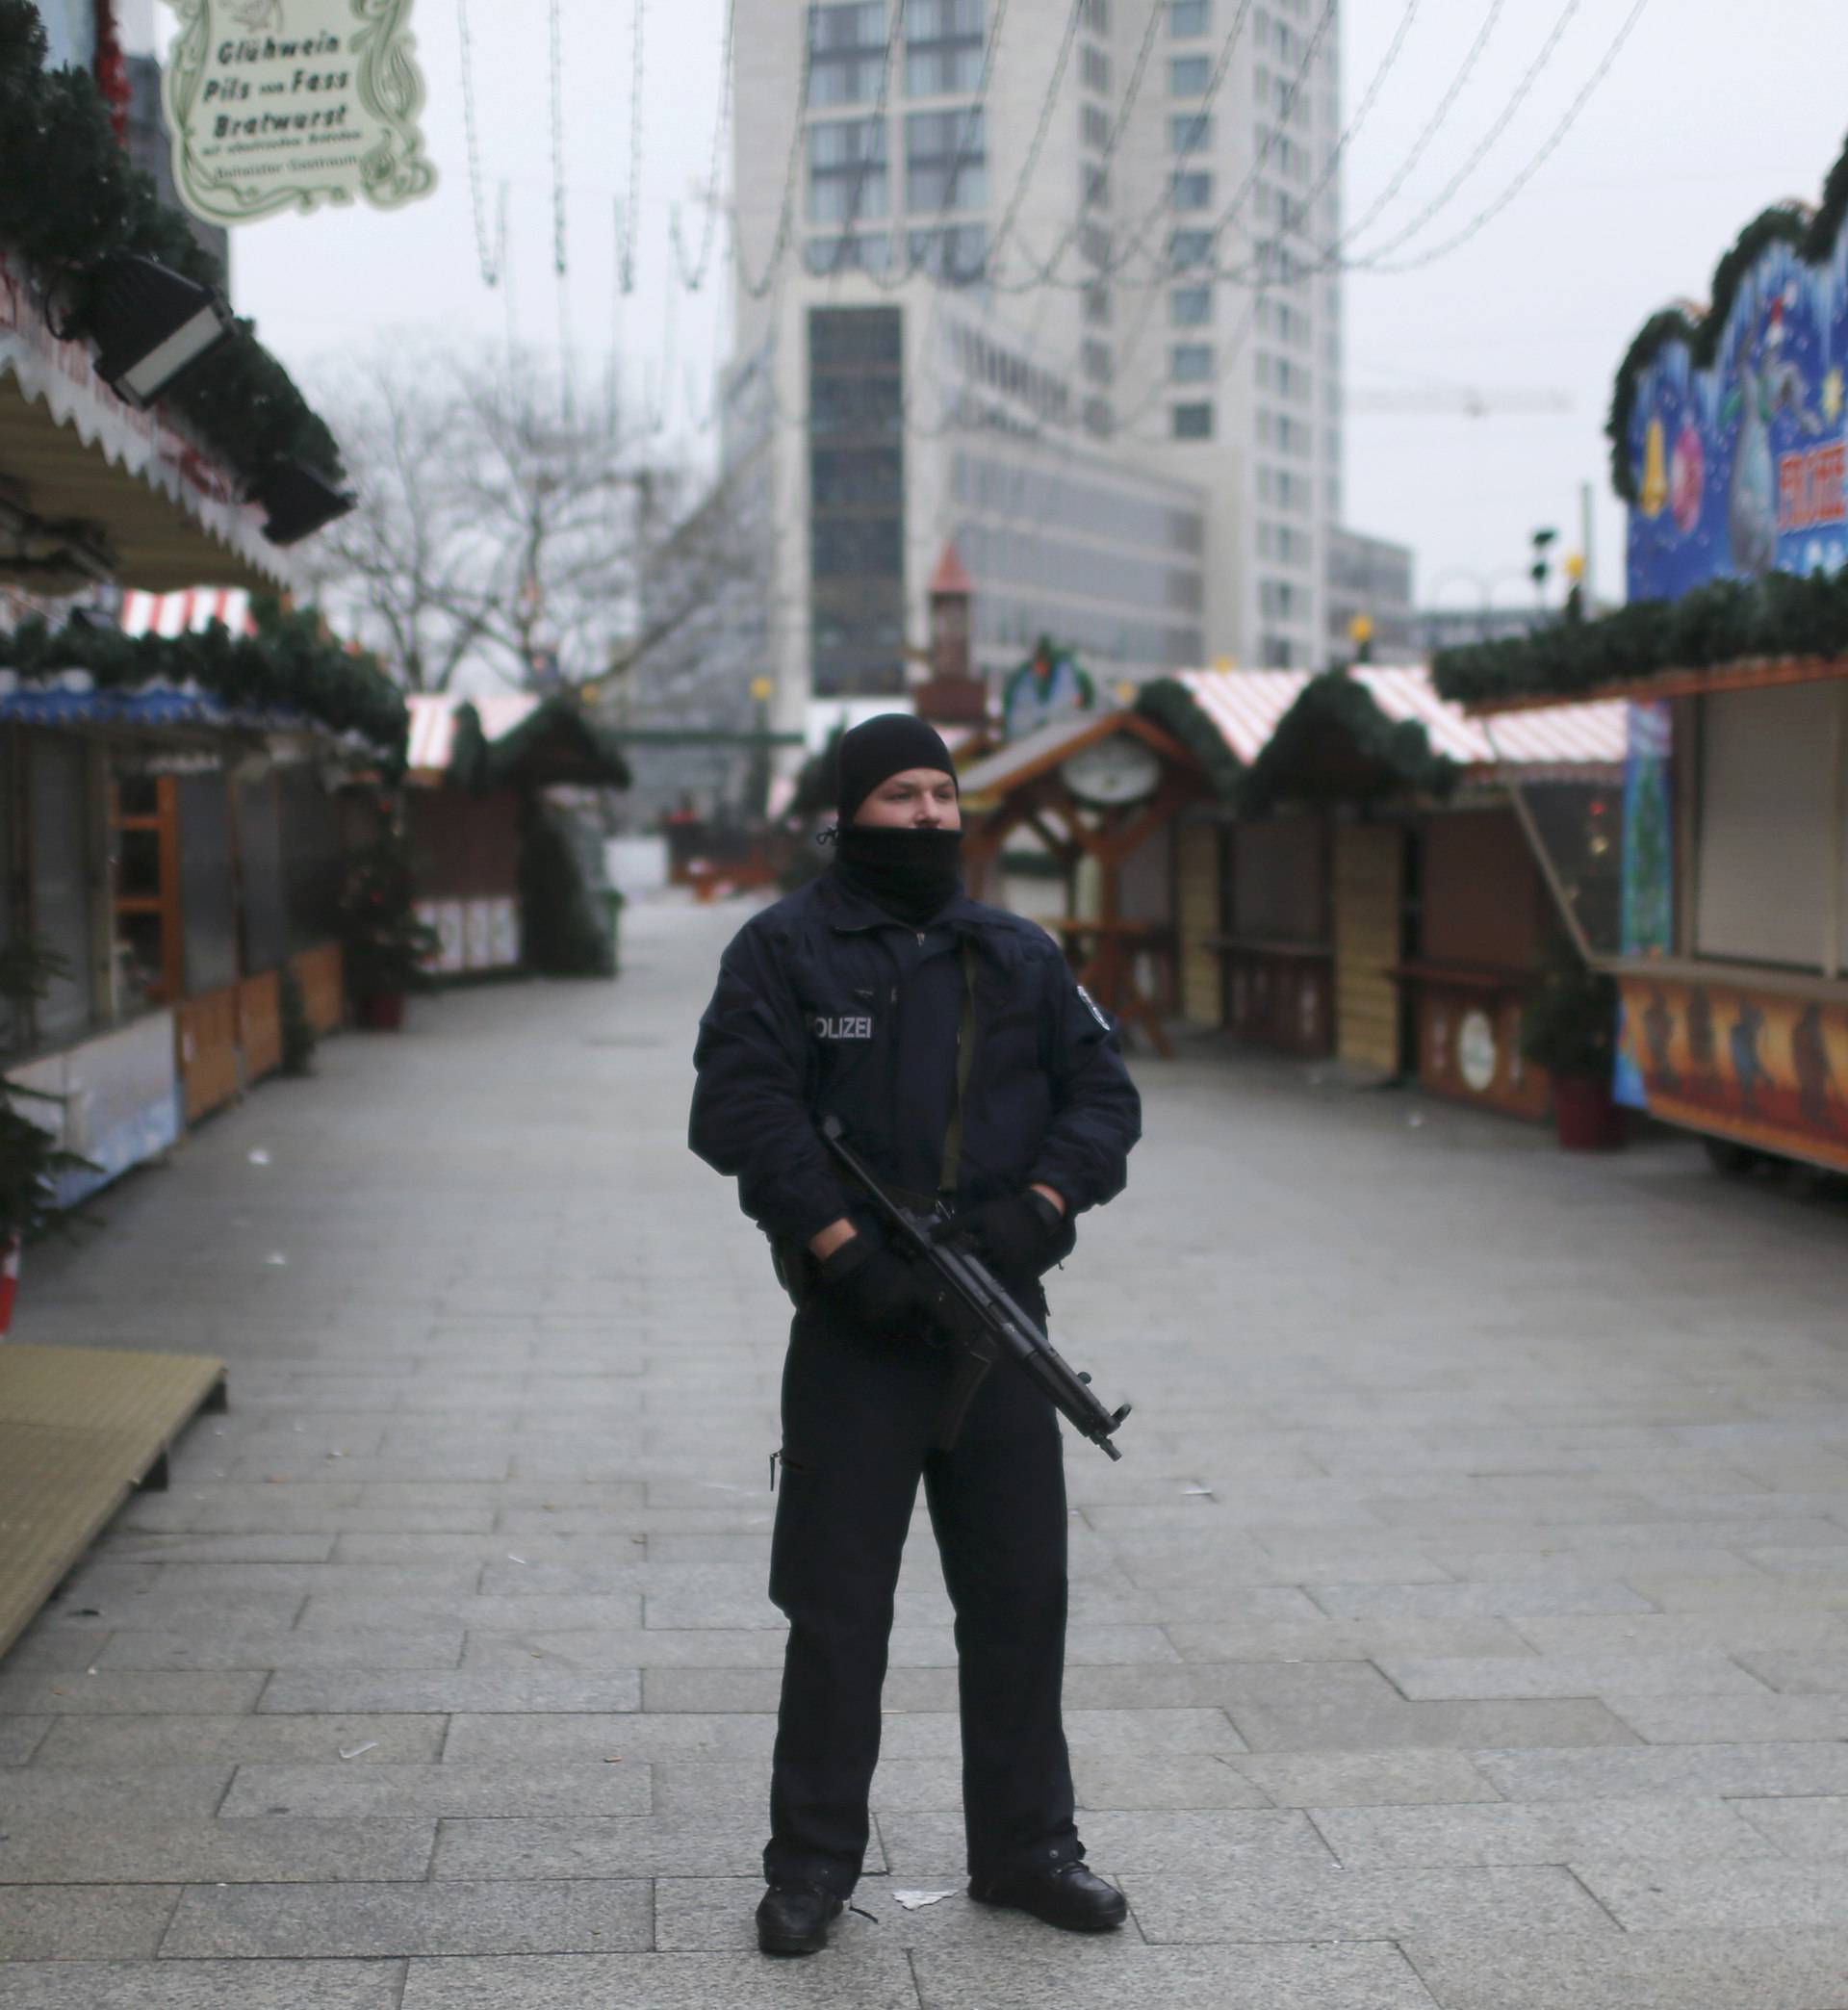 Police stands guard at the Kaiser-Wilhelm-Gedaechtniskirche Christmas market in Berlin